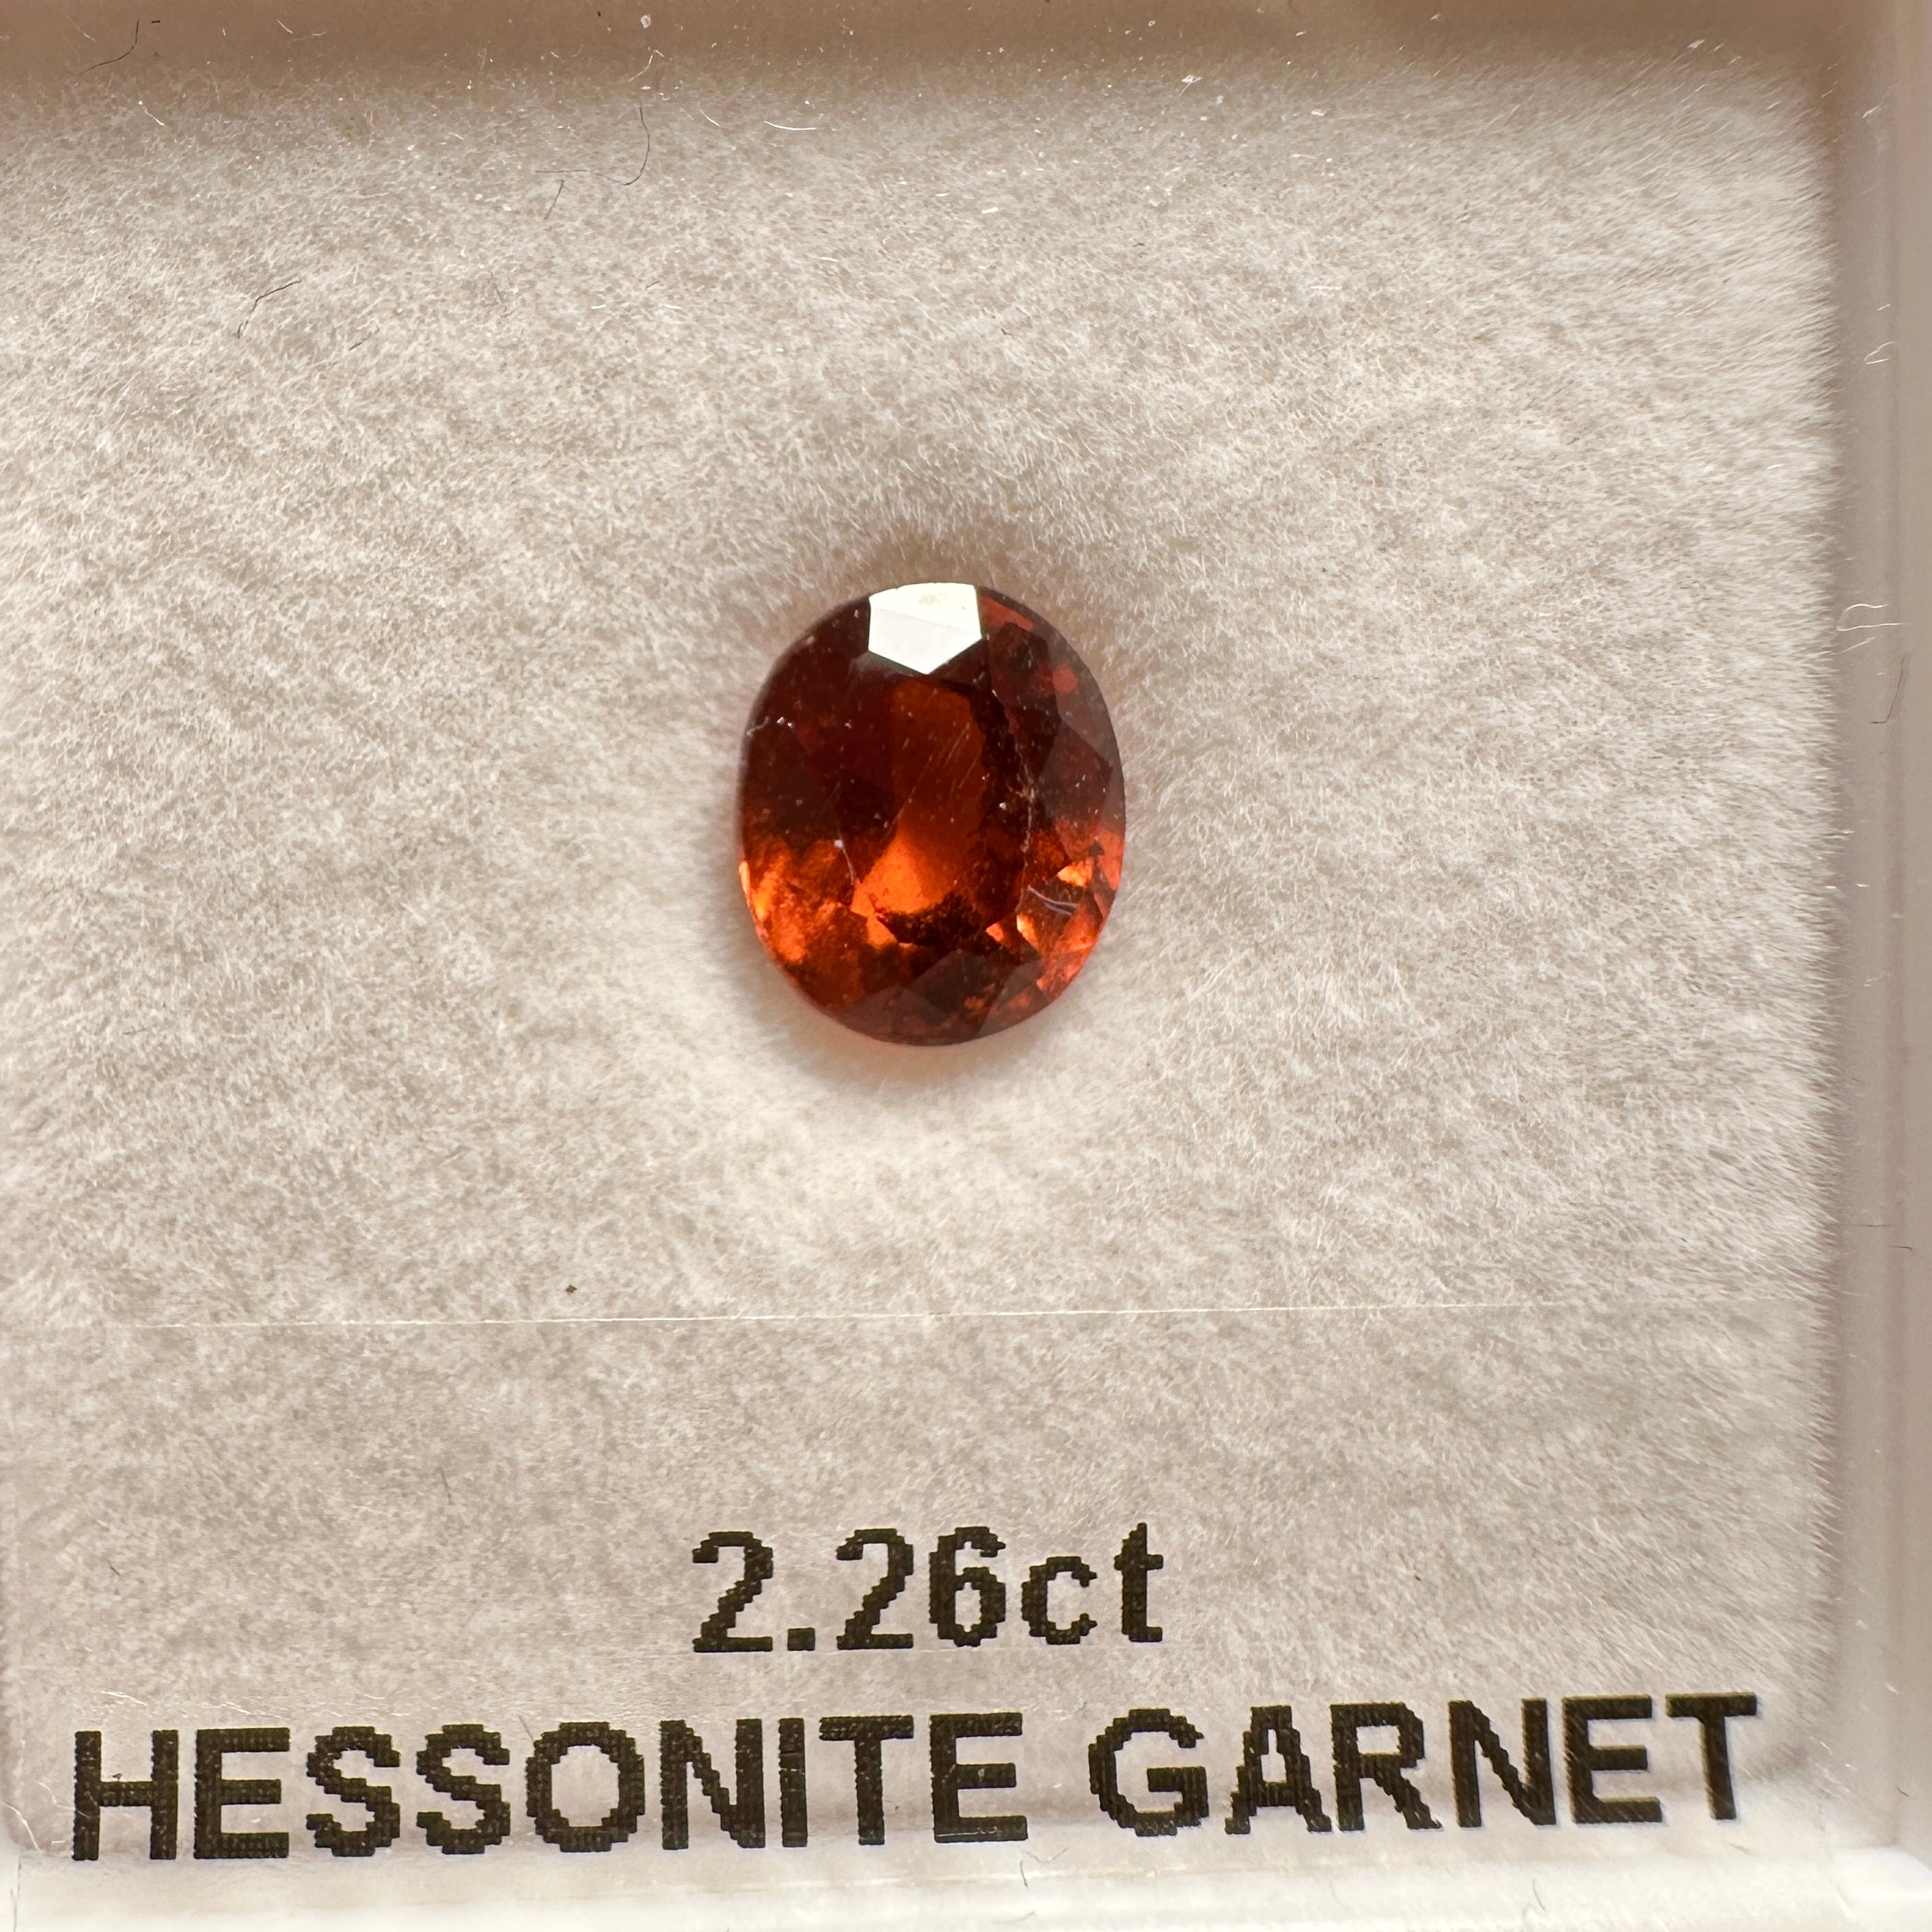 2.26ct Hessonite Garnet, Untreated Unheated, native cut